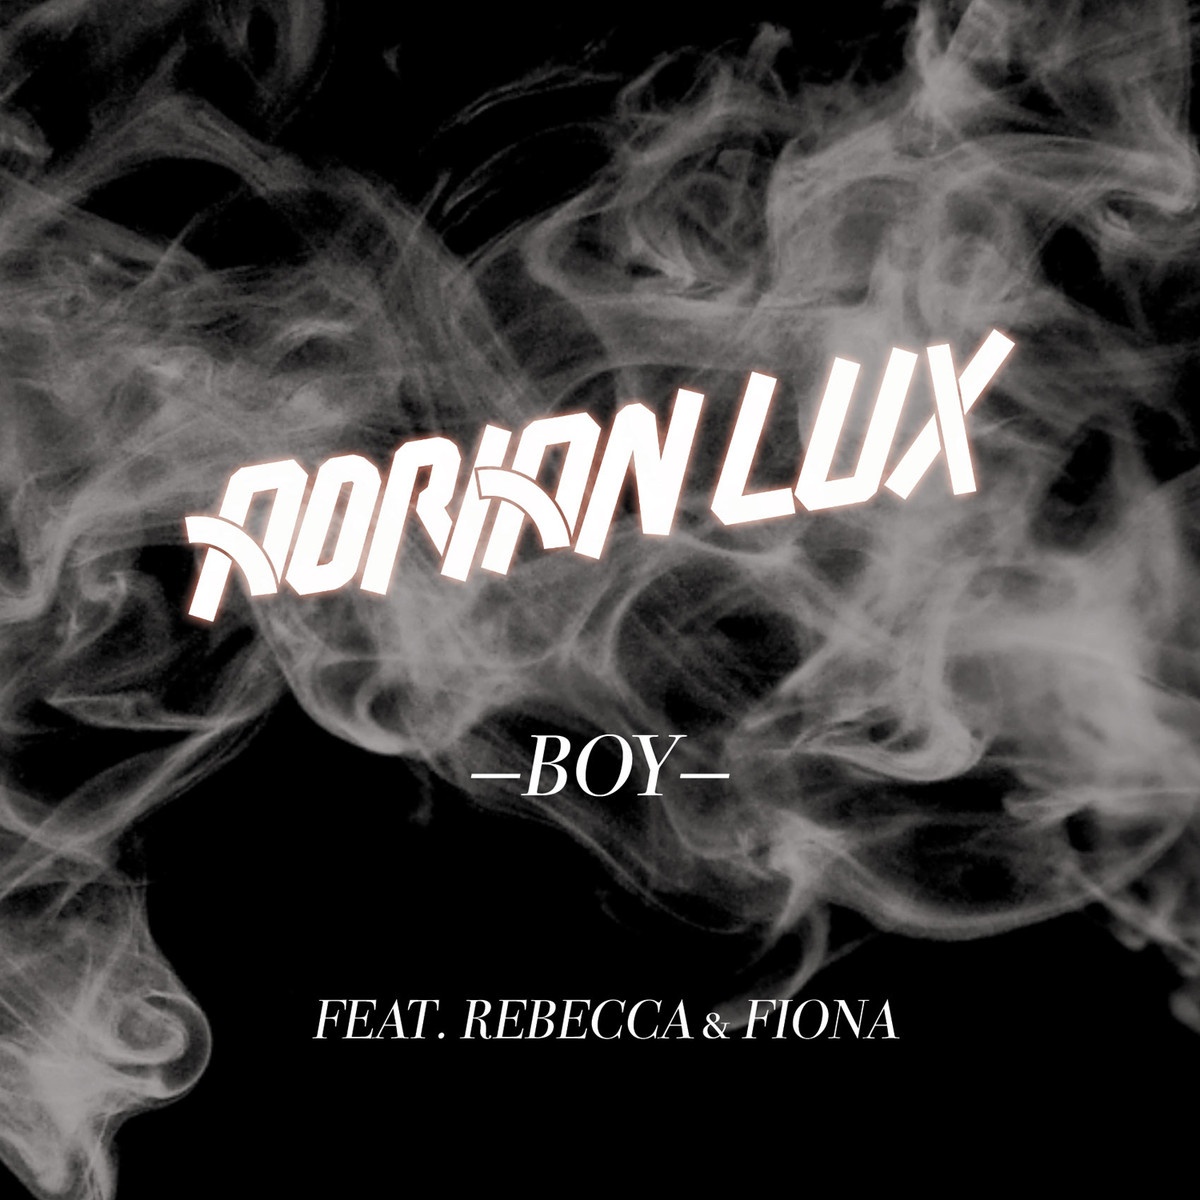 Boy (Hardwell Remix) [feat. Rebecca & Fiona]